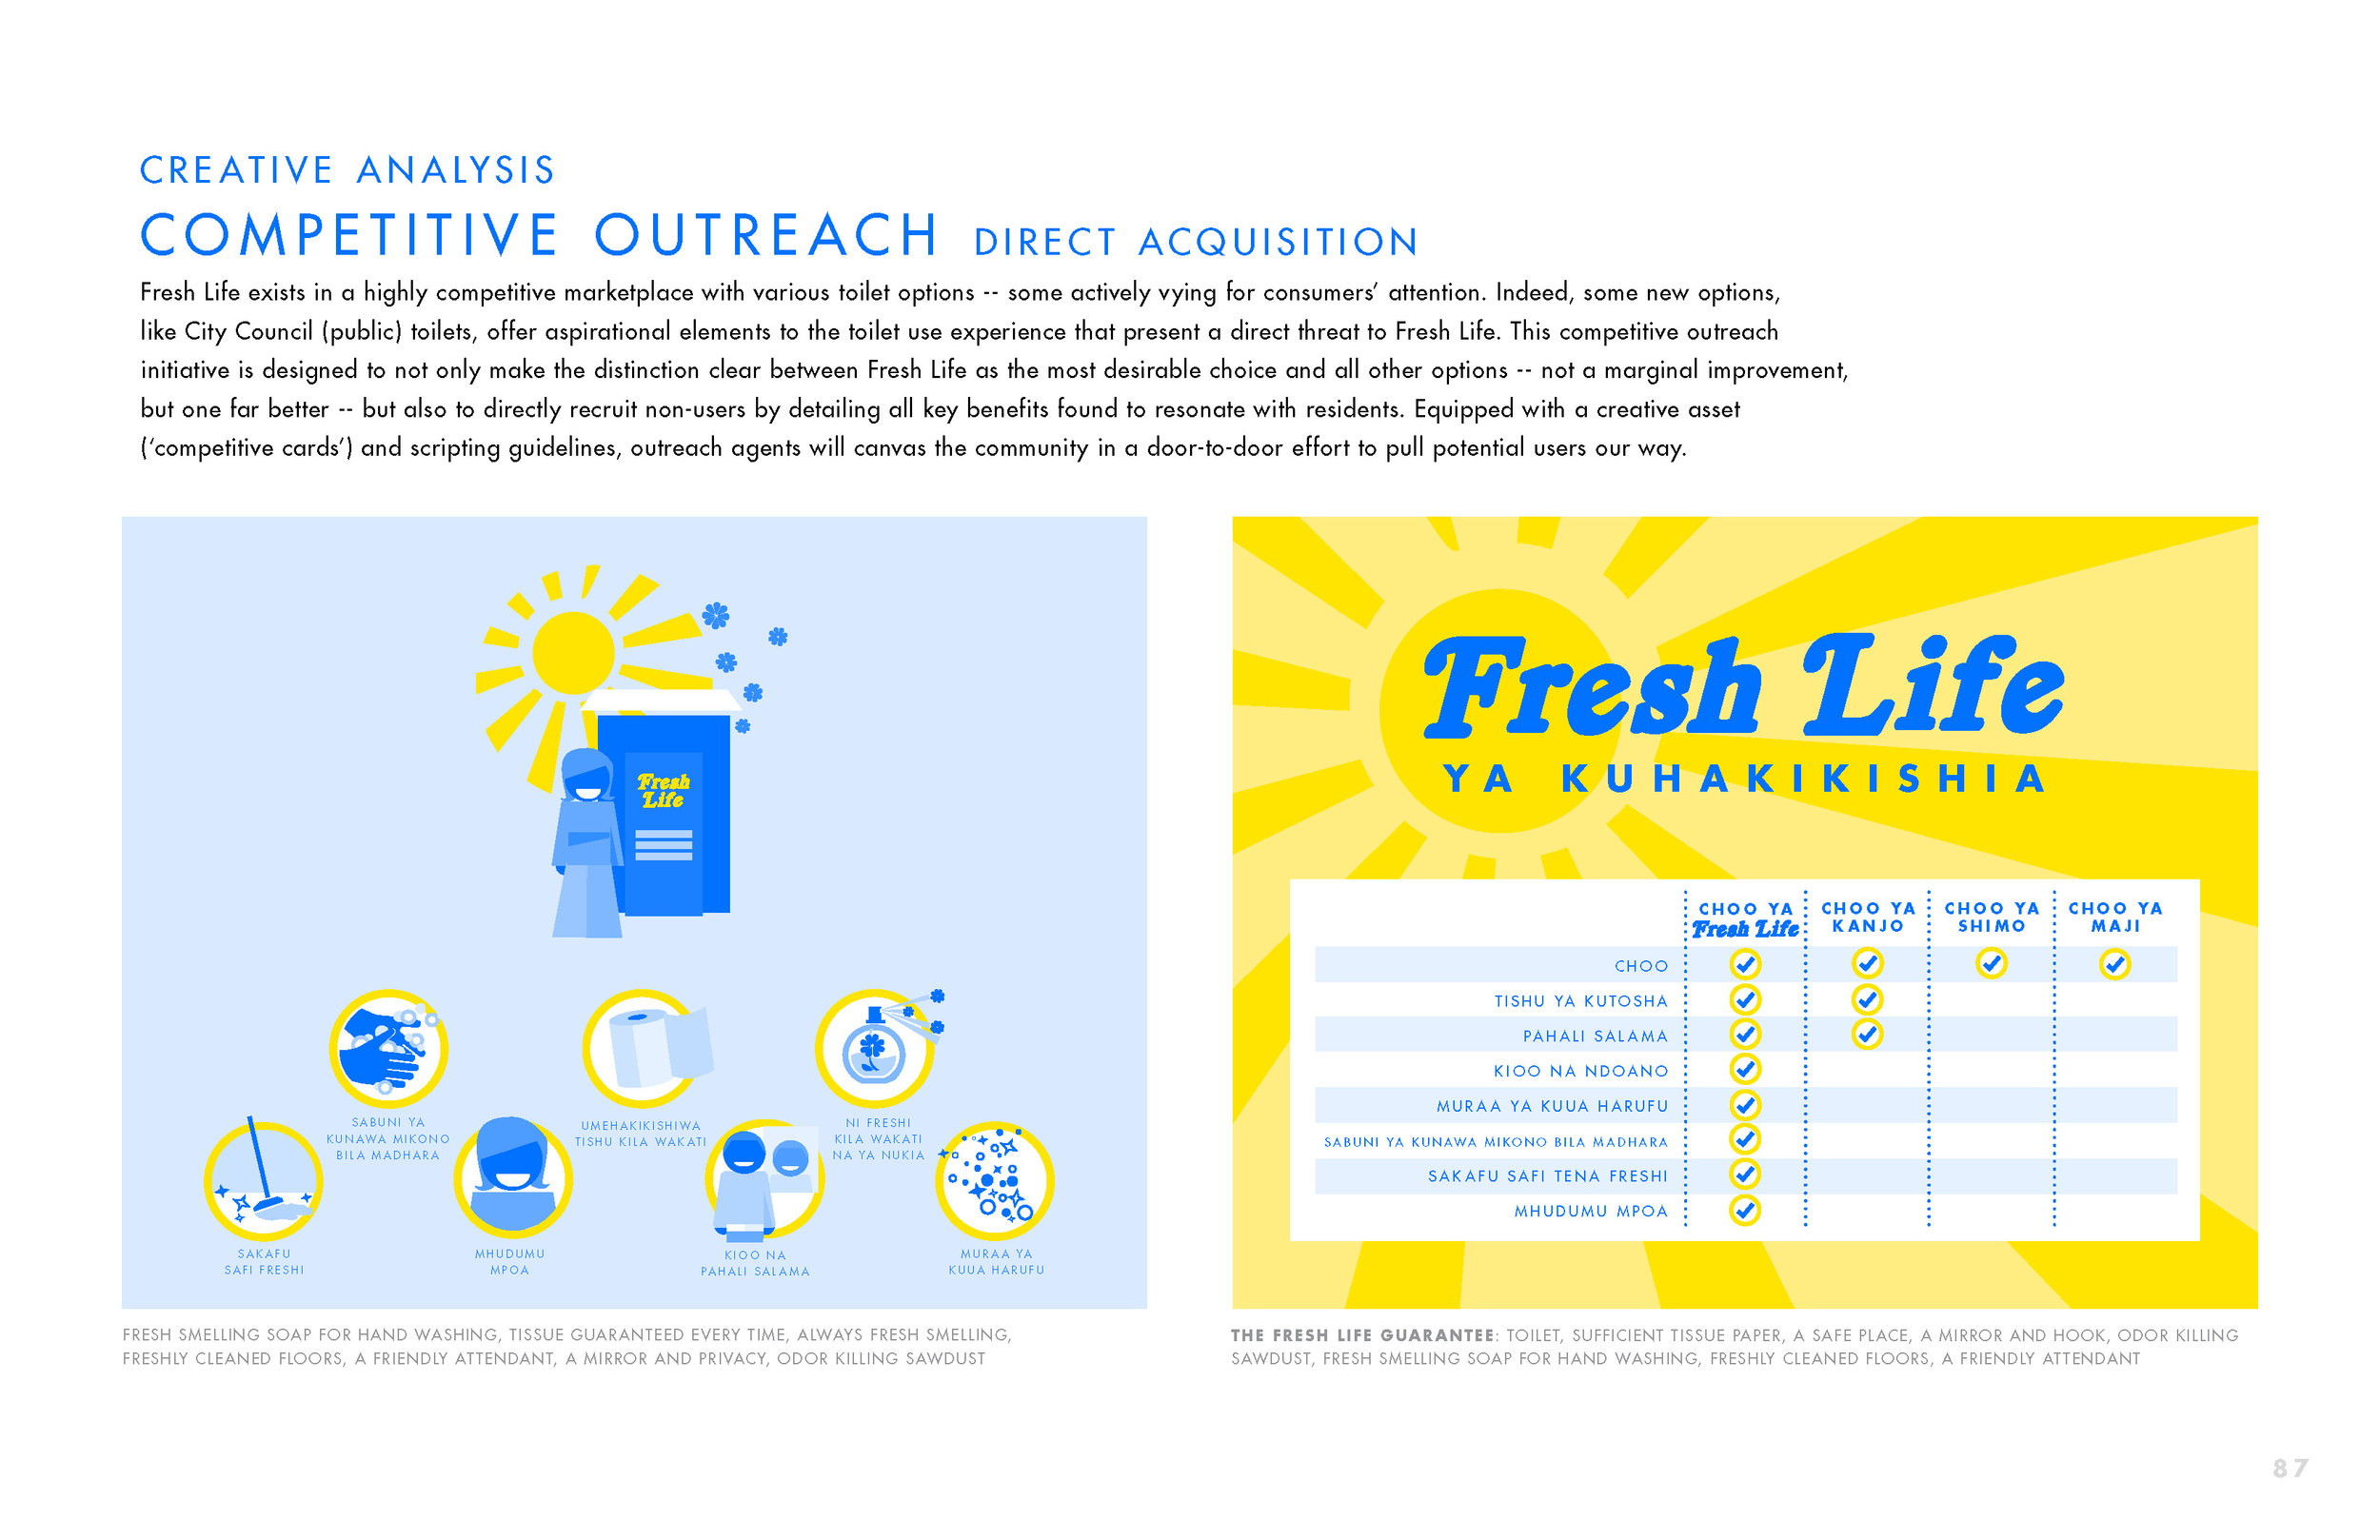 Fresh Life FINAL PDF 10.20.14_Page_087.jpg